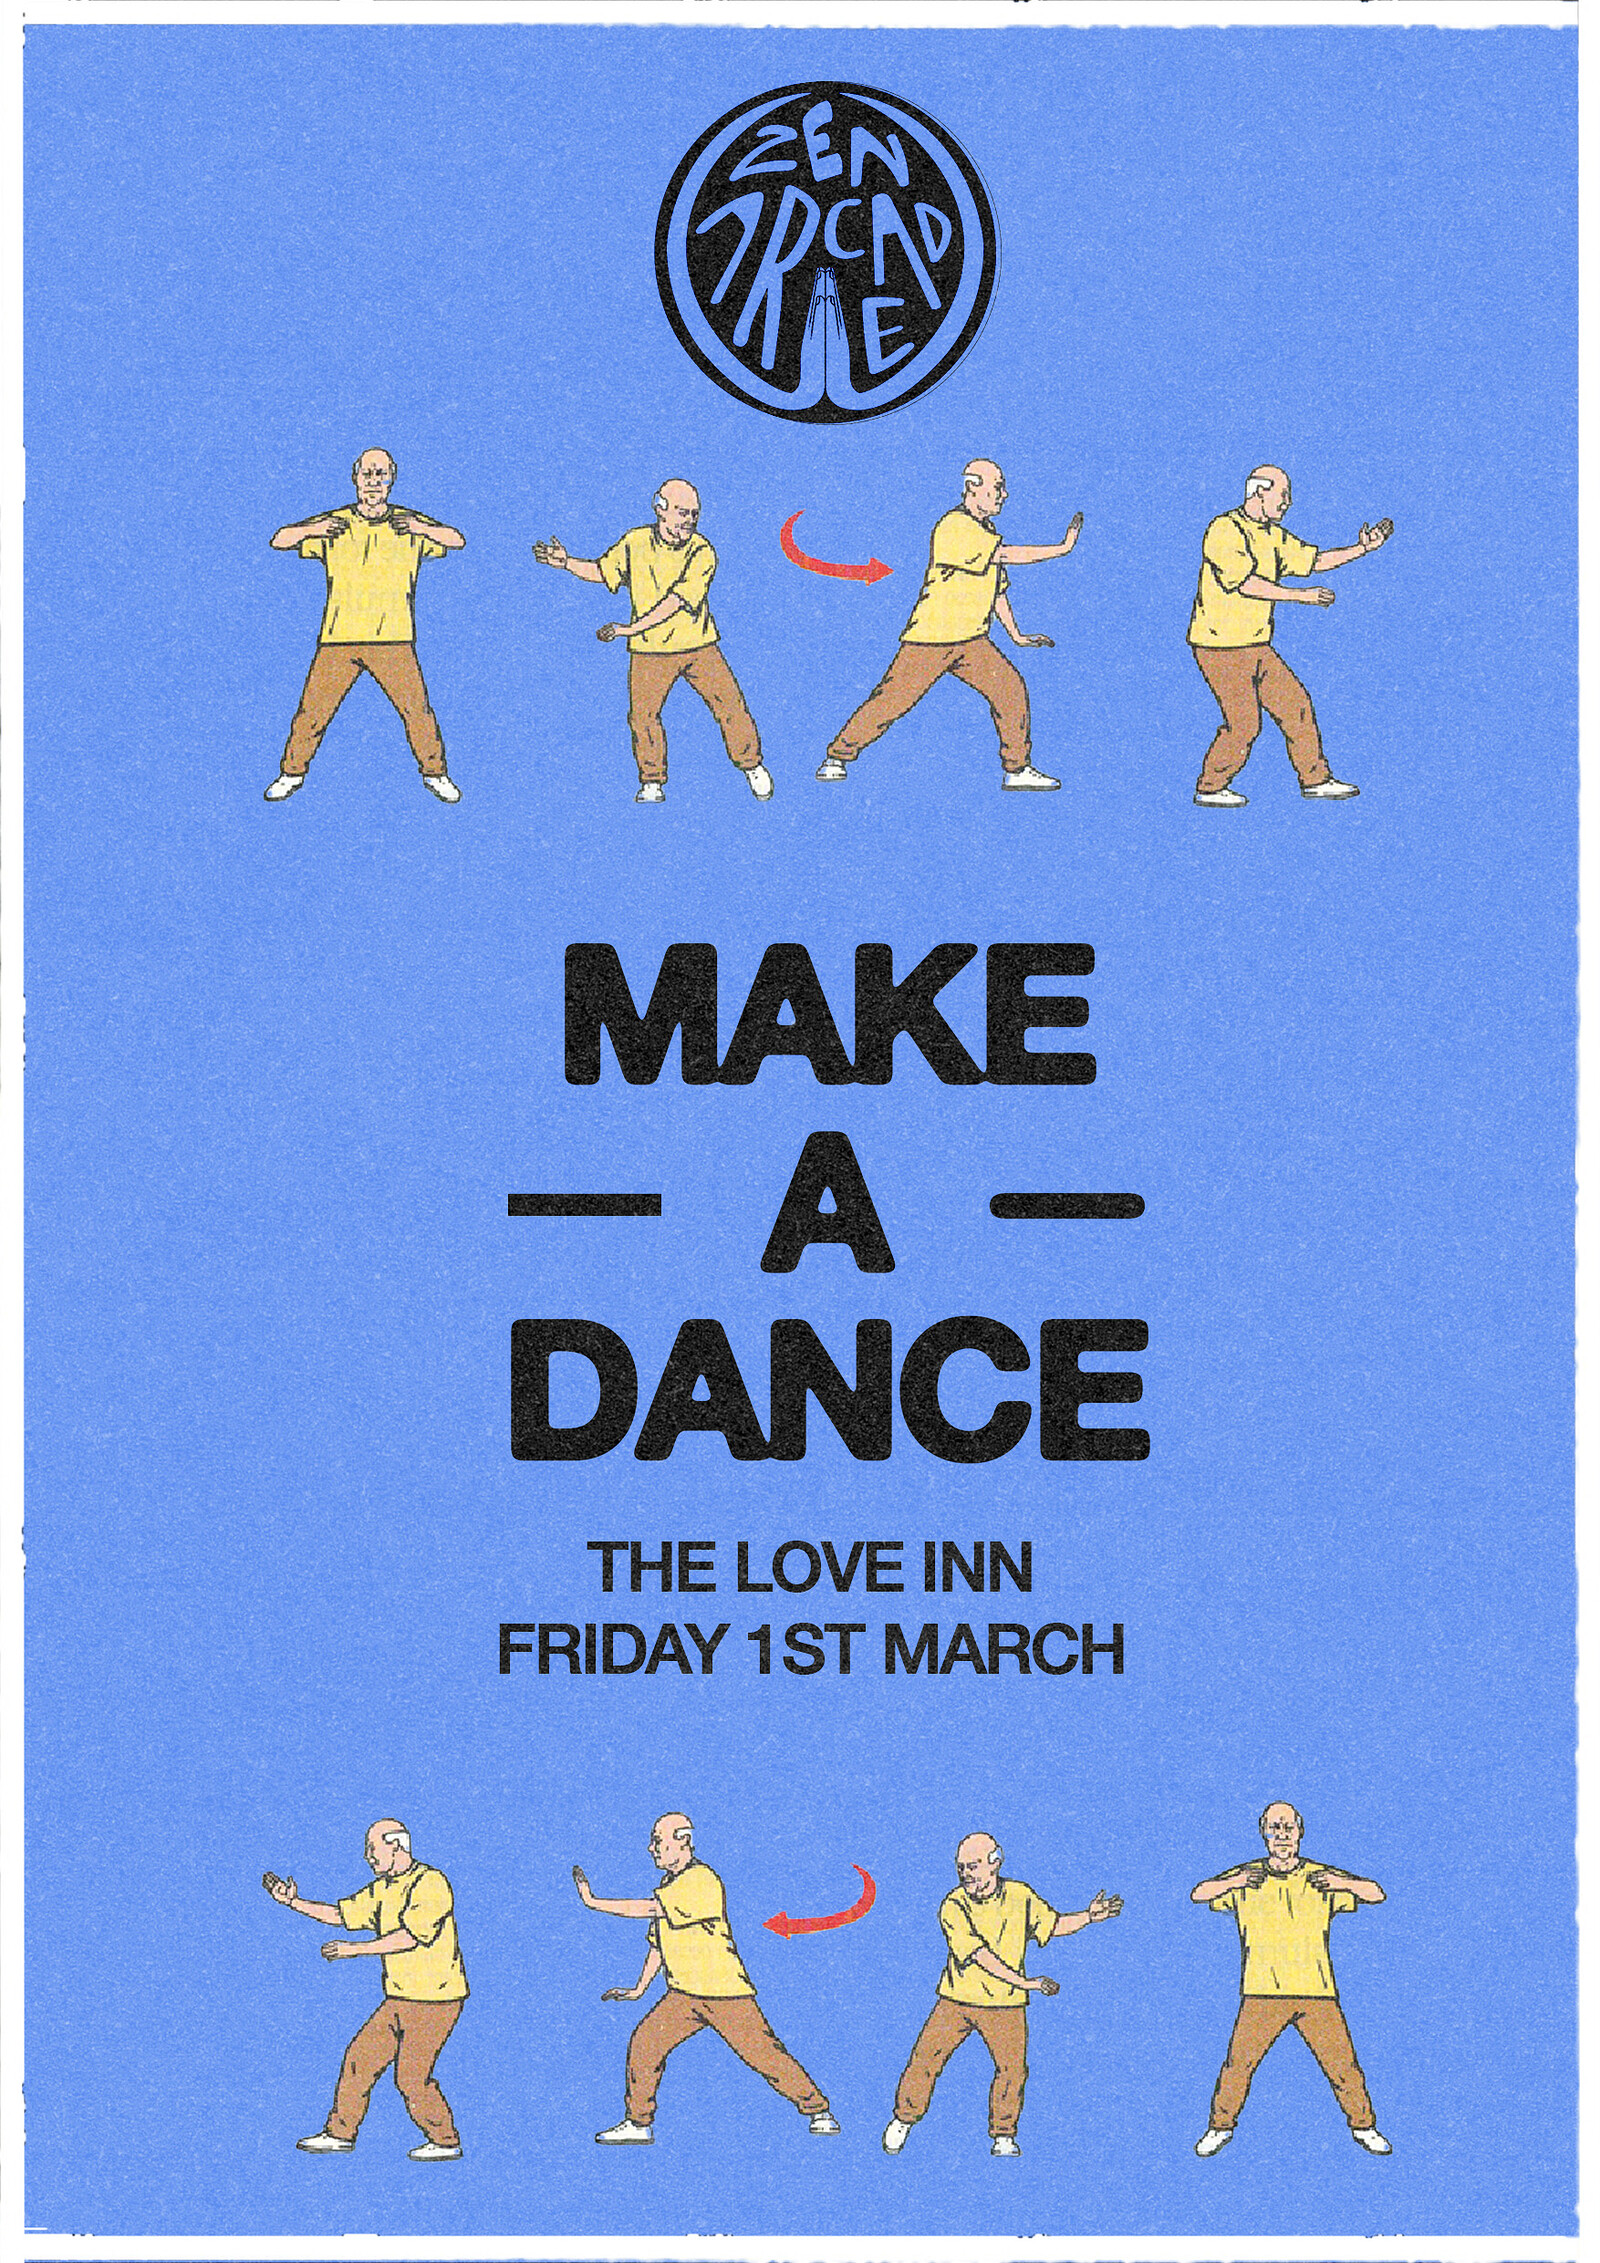 Zen Arcade w/ Make A Dance at The Love Inn